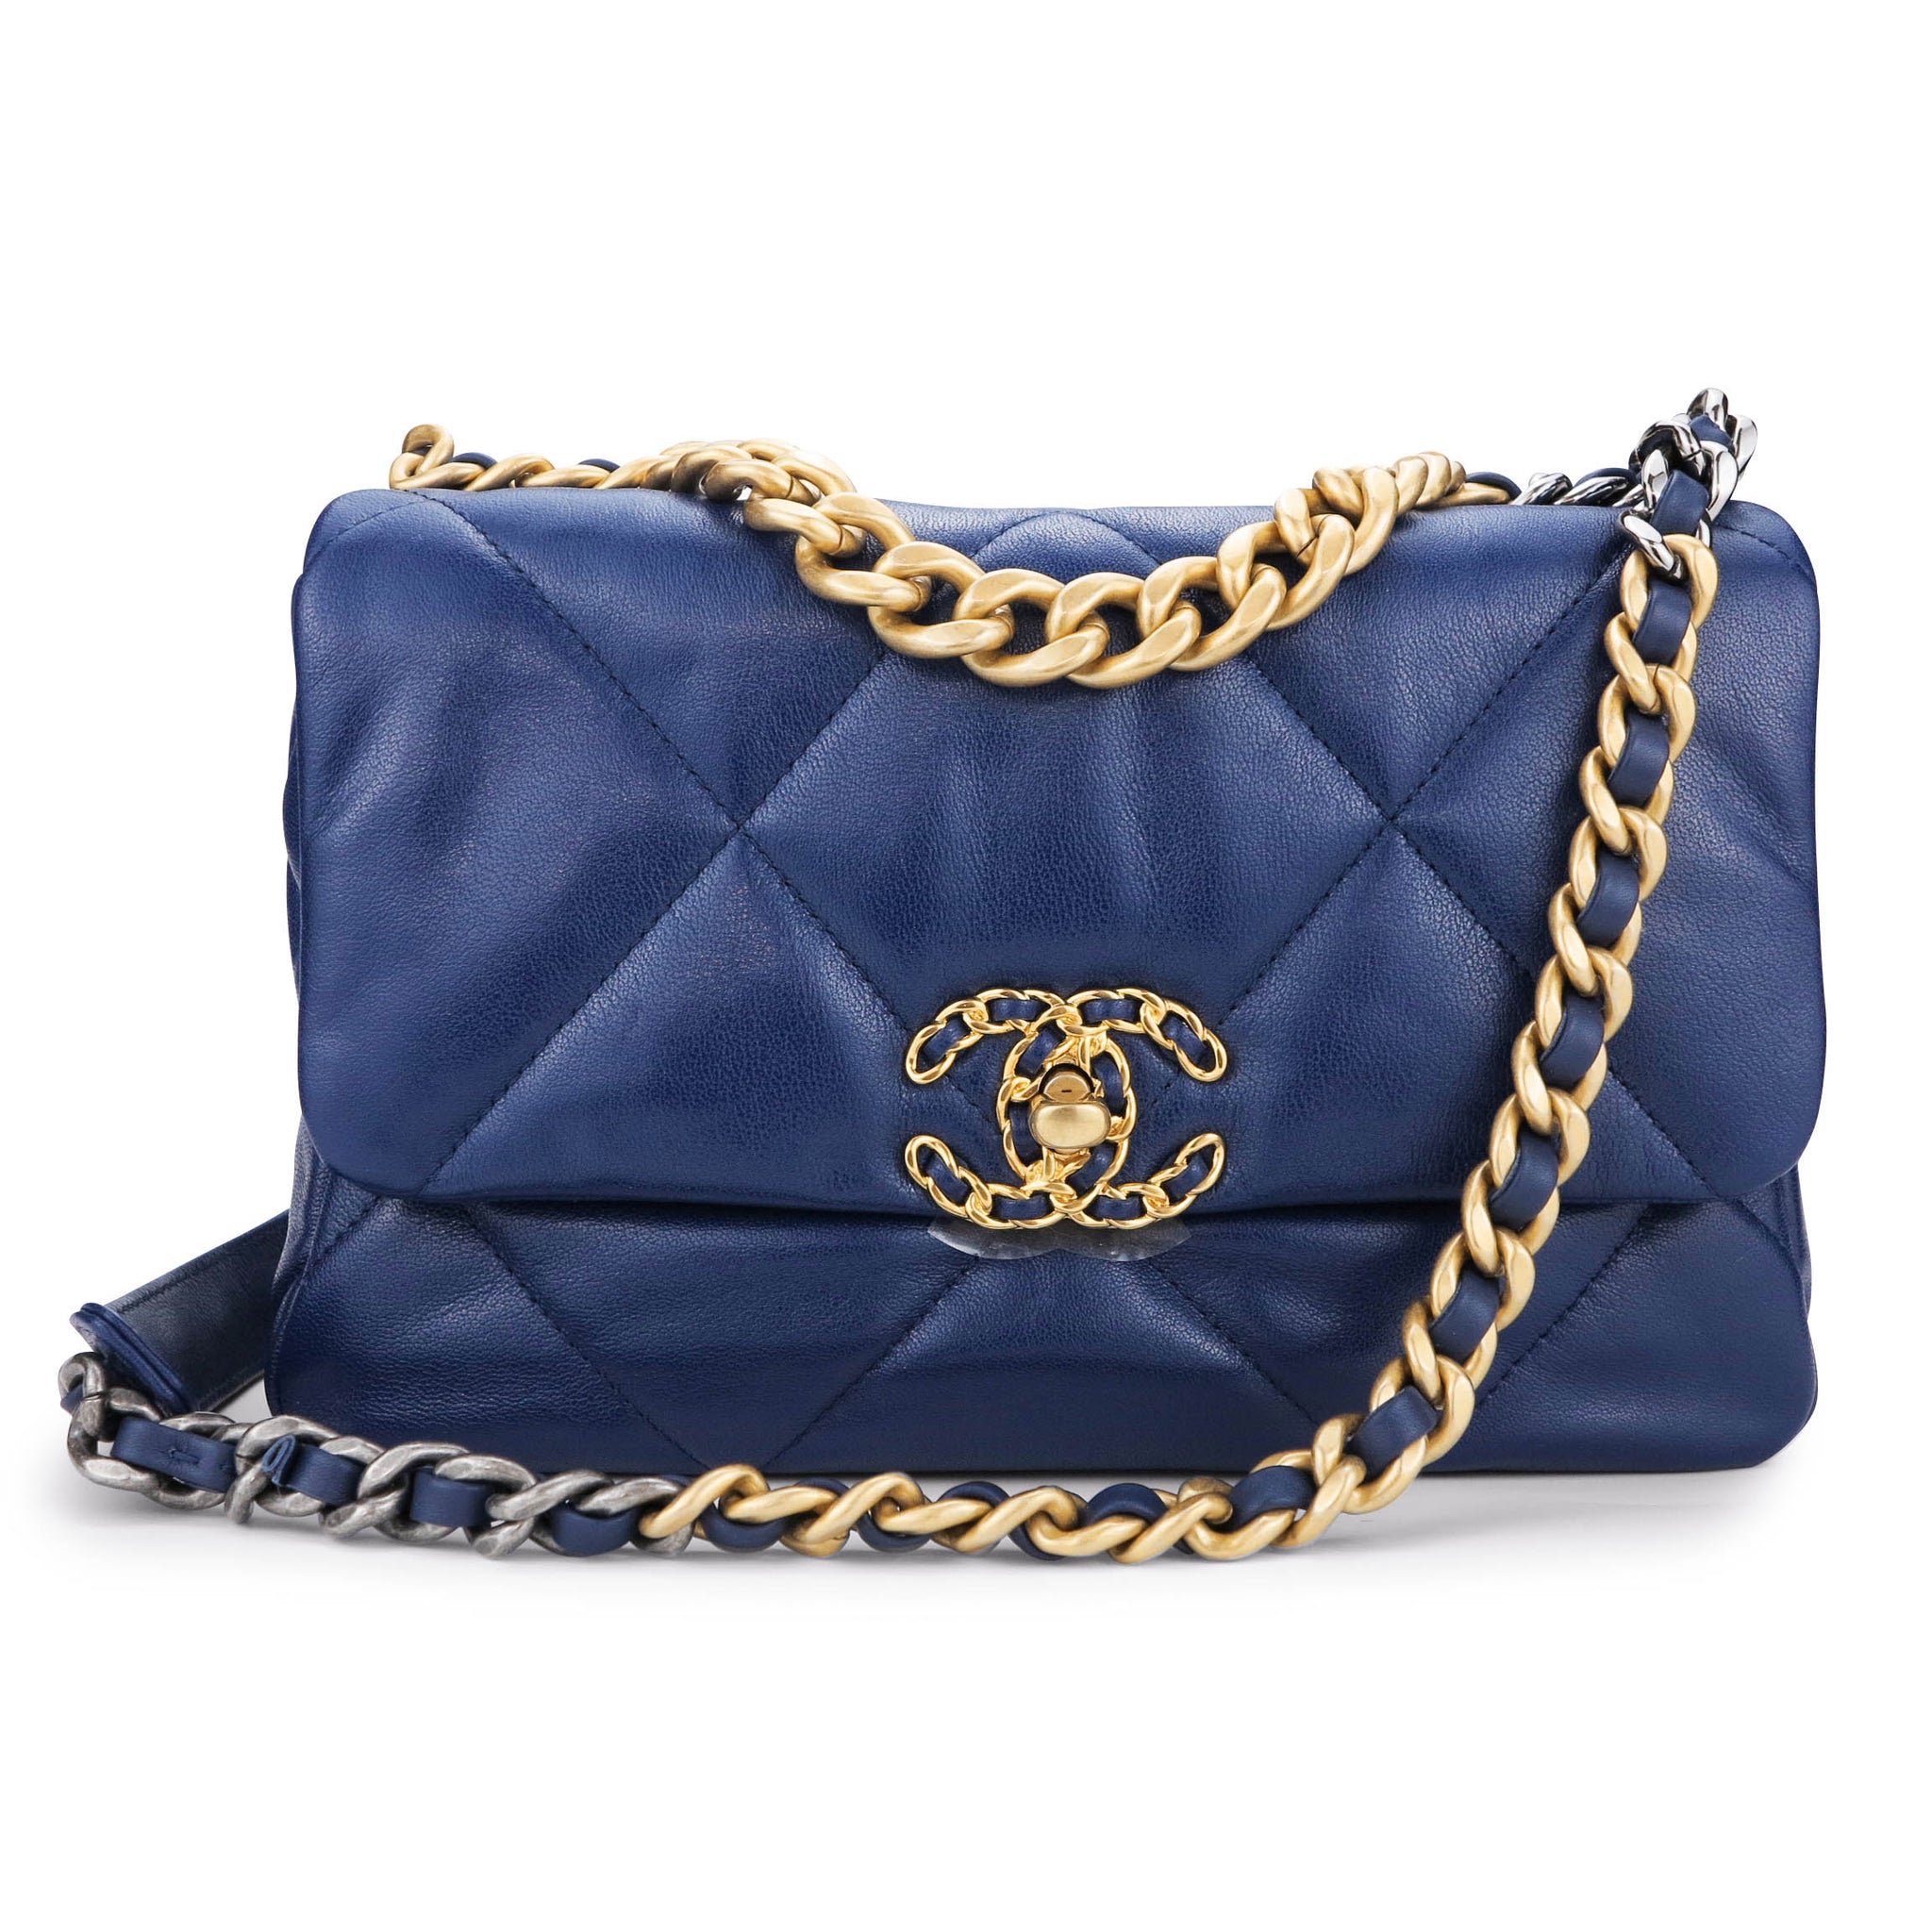 aaa頂級復刻Chanel 超級火爆22 bag Chanel 22s 小號手提包深藍色尺寸 39x35x8cm  MPZincom